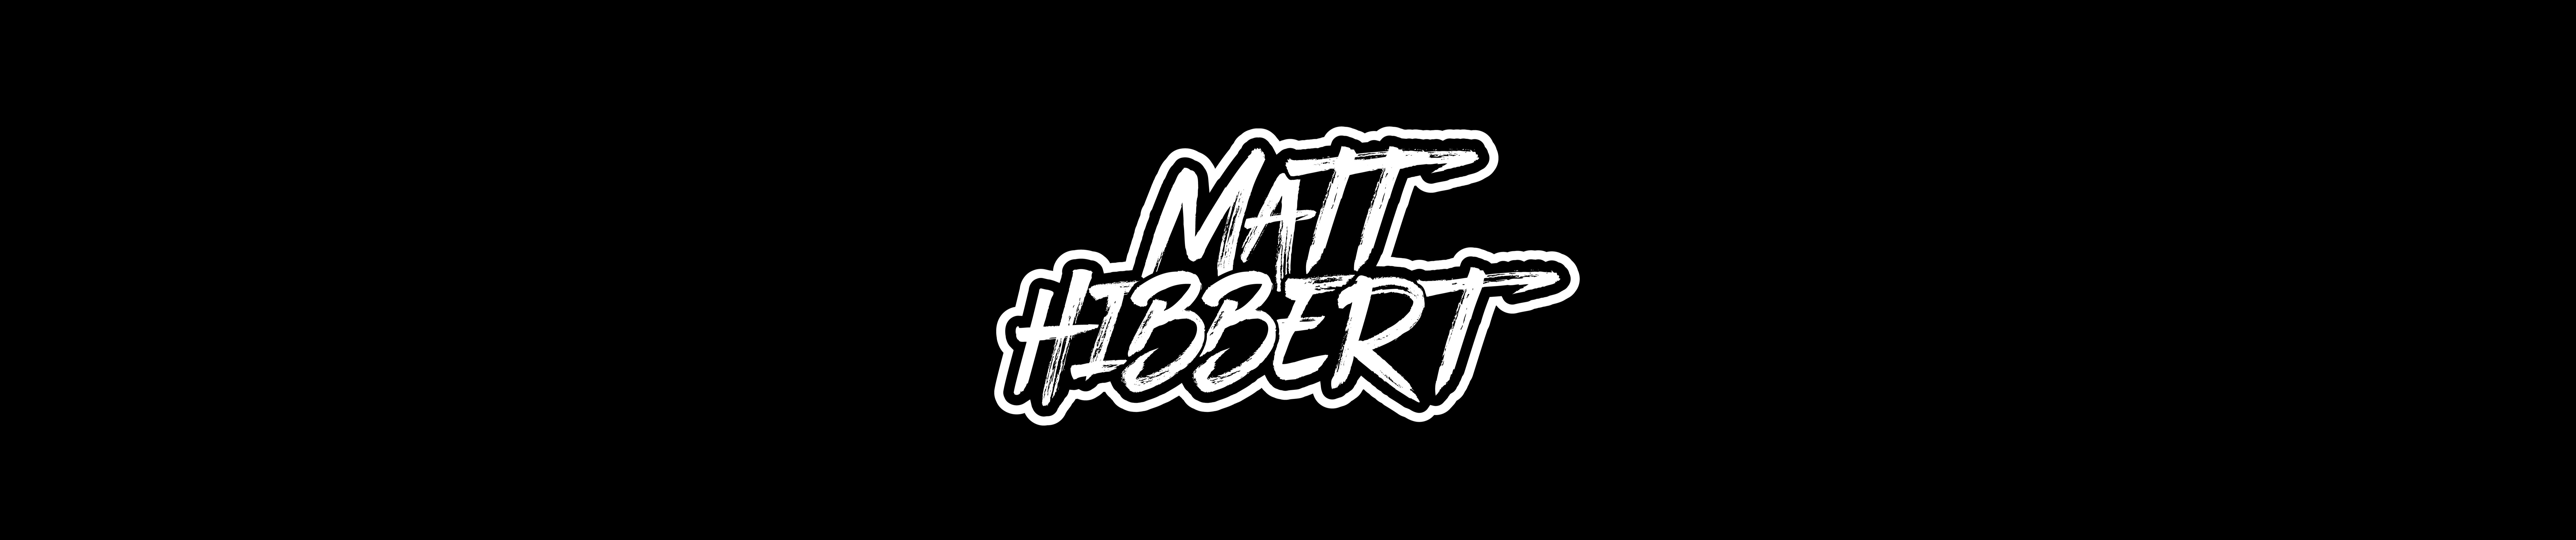 Stream Faithless - Insomnia (Matt Hibbert Groove Up) (blanc) (Re-Upload) by Matt  Hibbert | Listen online for free on SoundCloud